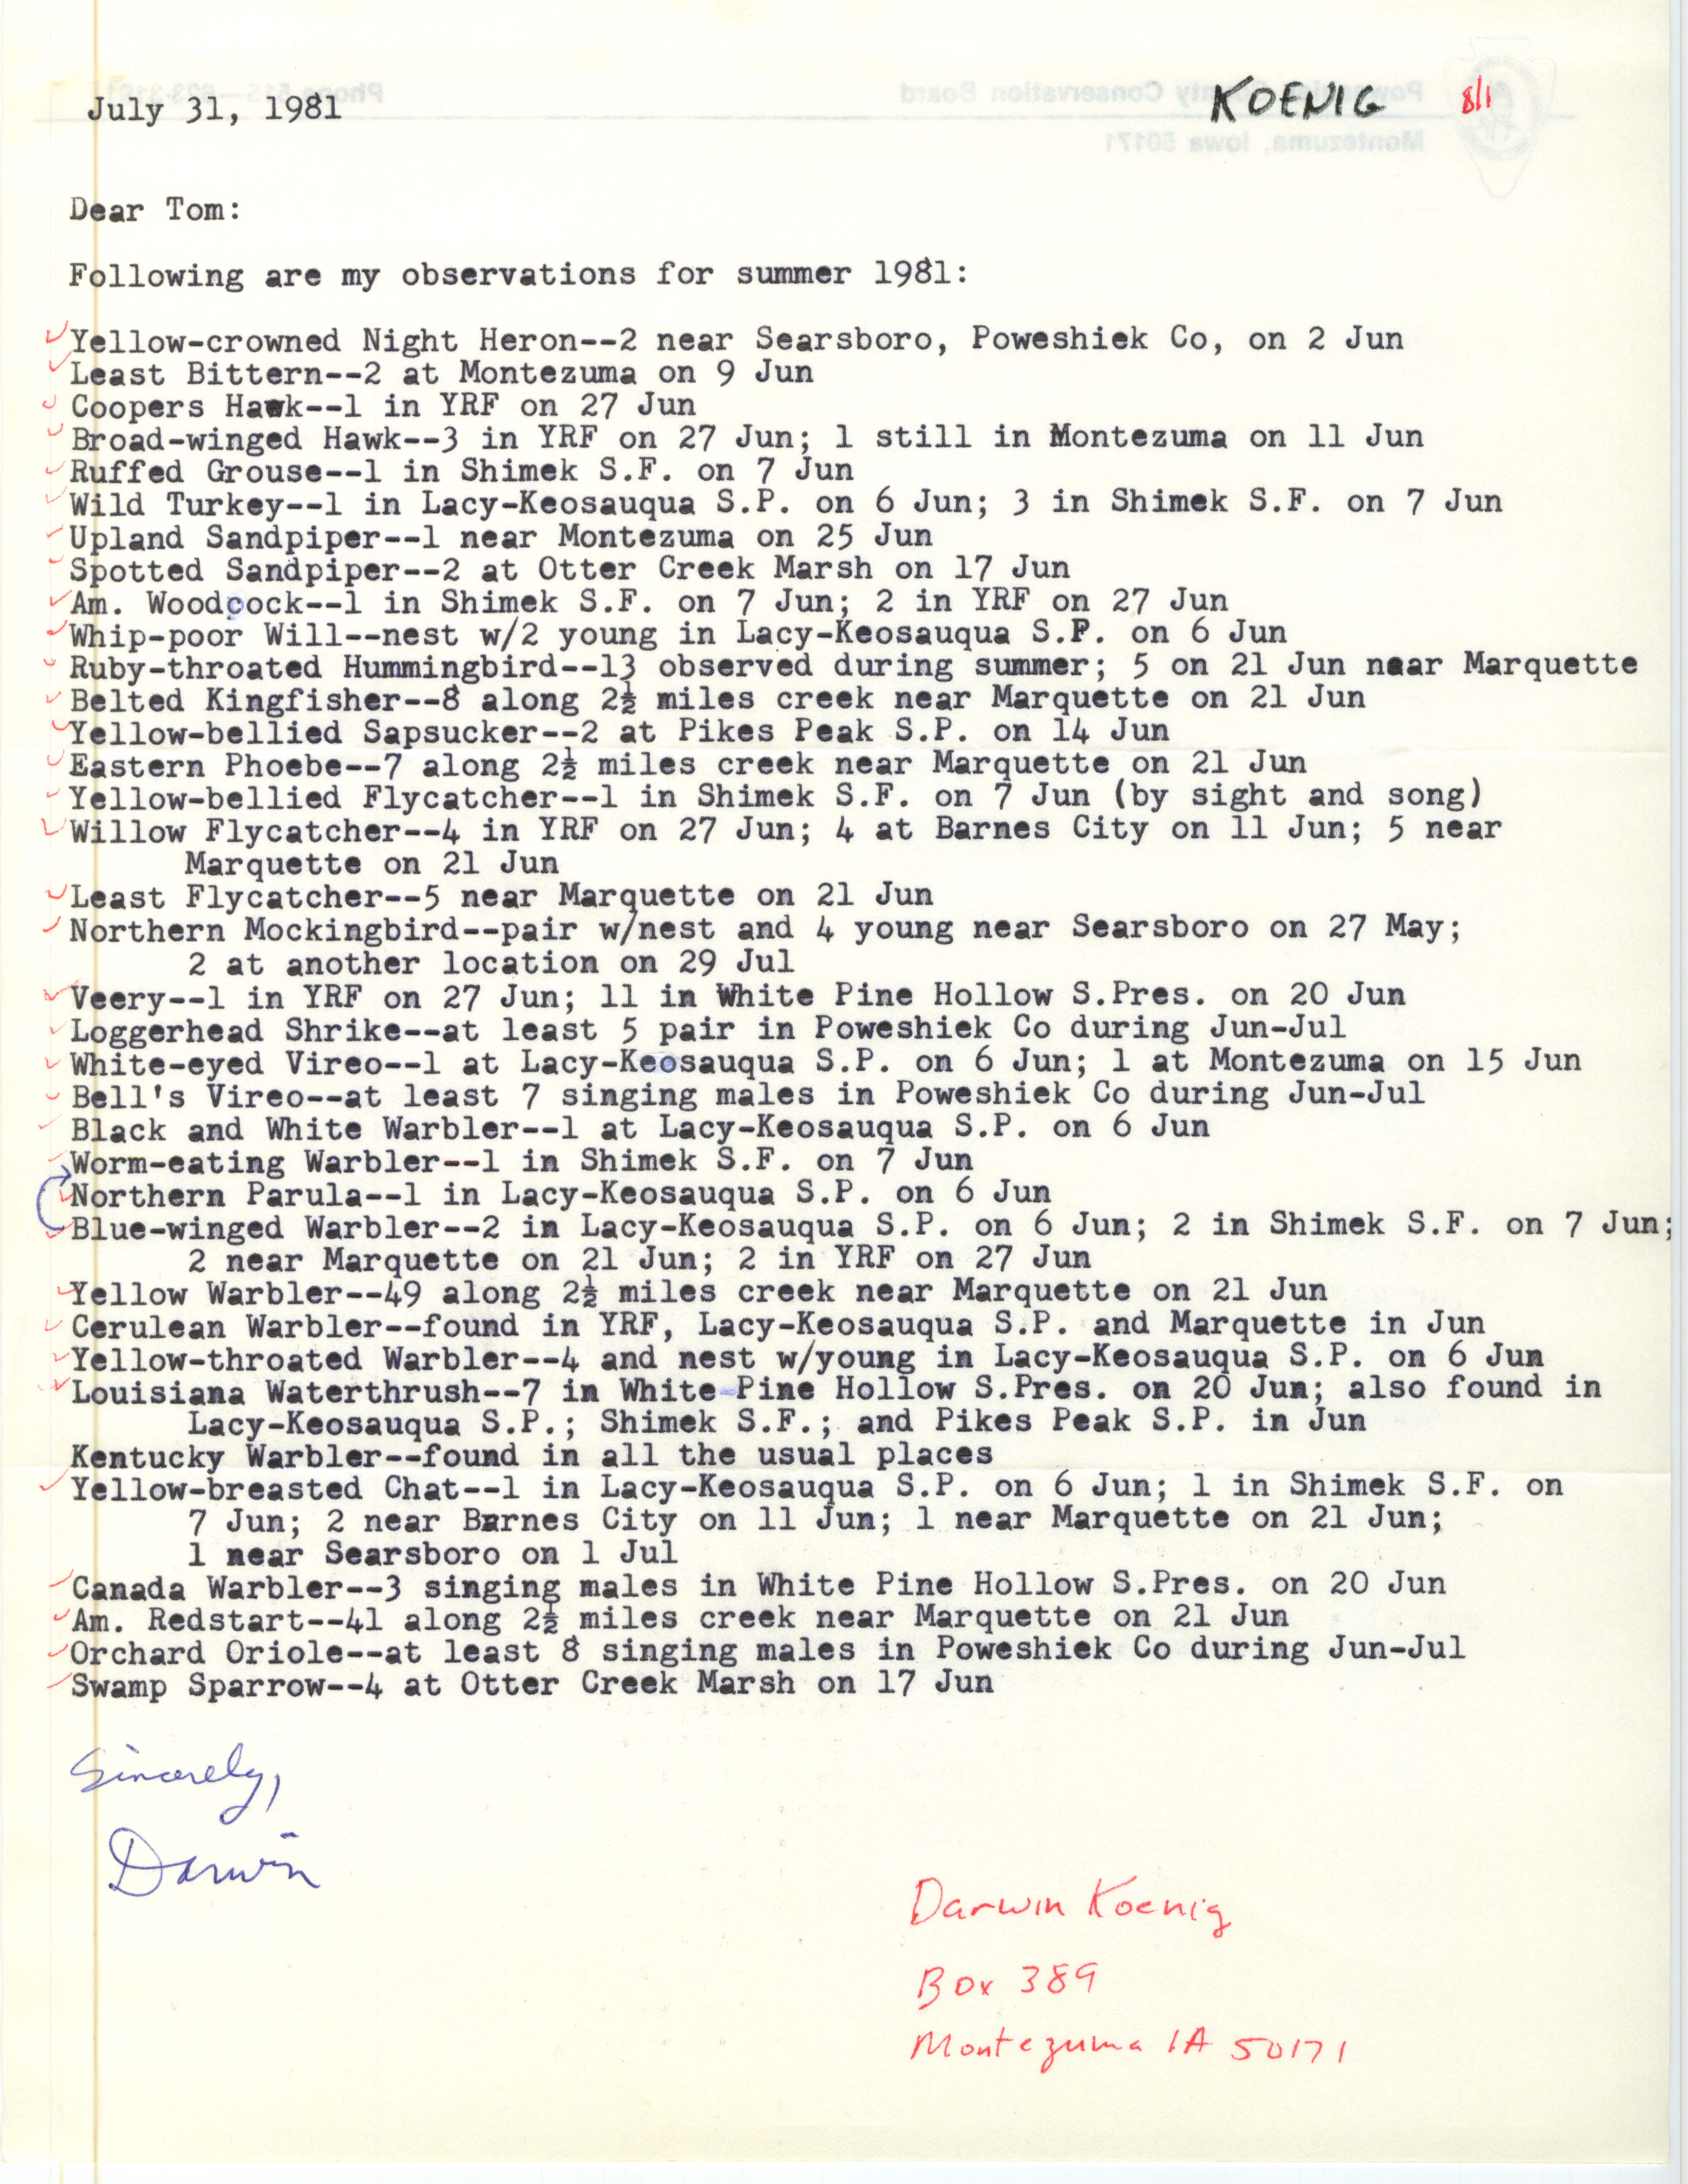 Darwin Koenig letter to Thomas H. Kent regarding summer bird sightings, July 31, 1981